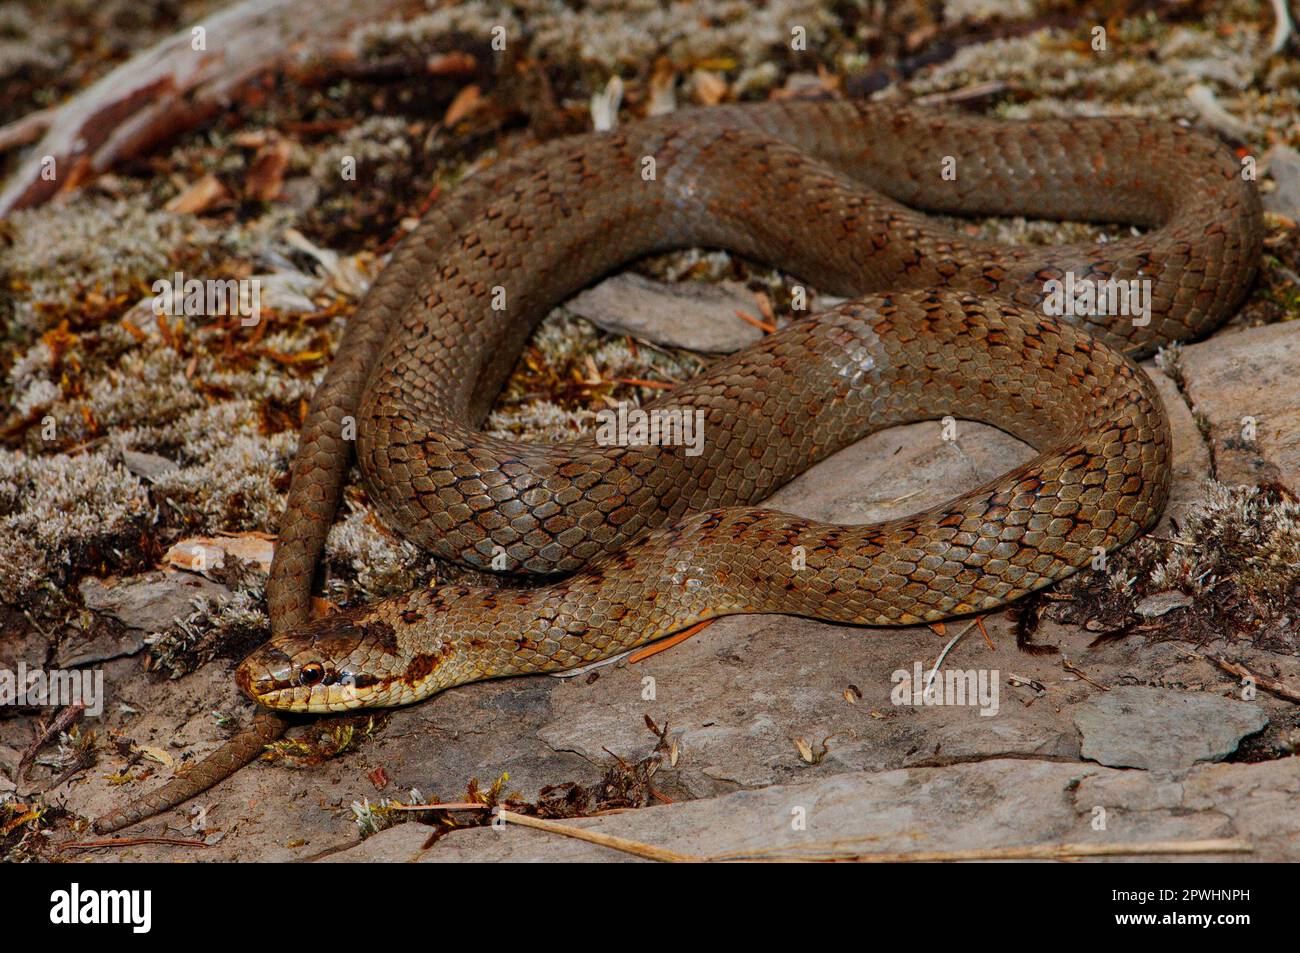 Smooth snake Stock Photo